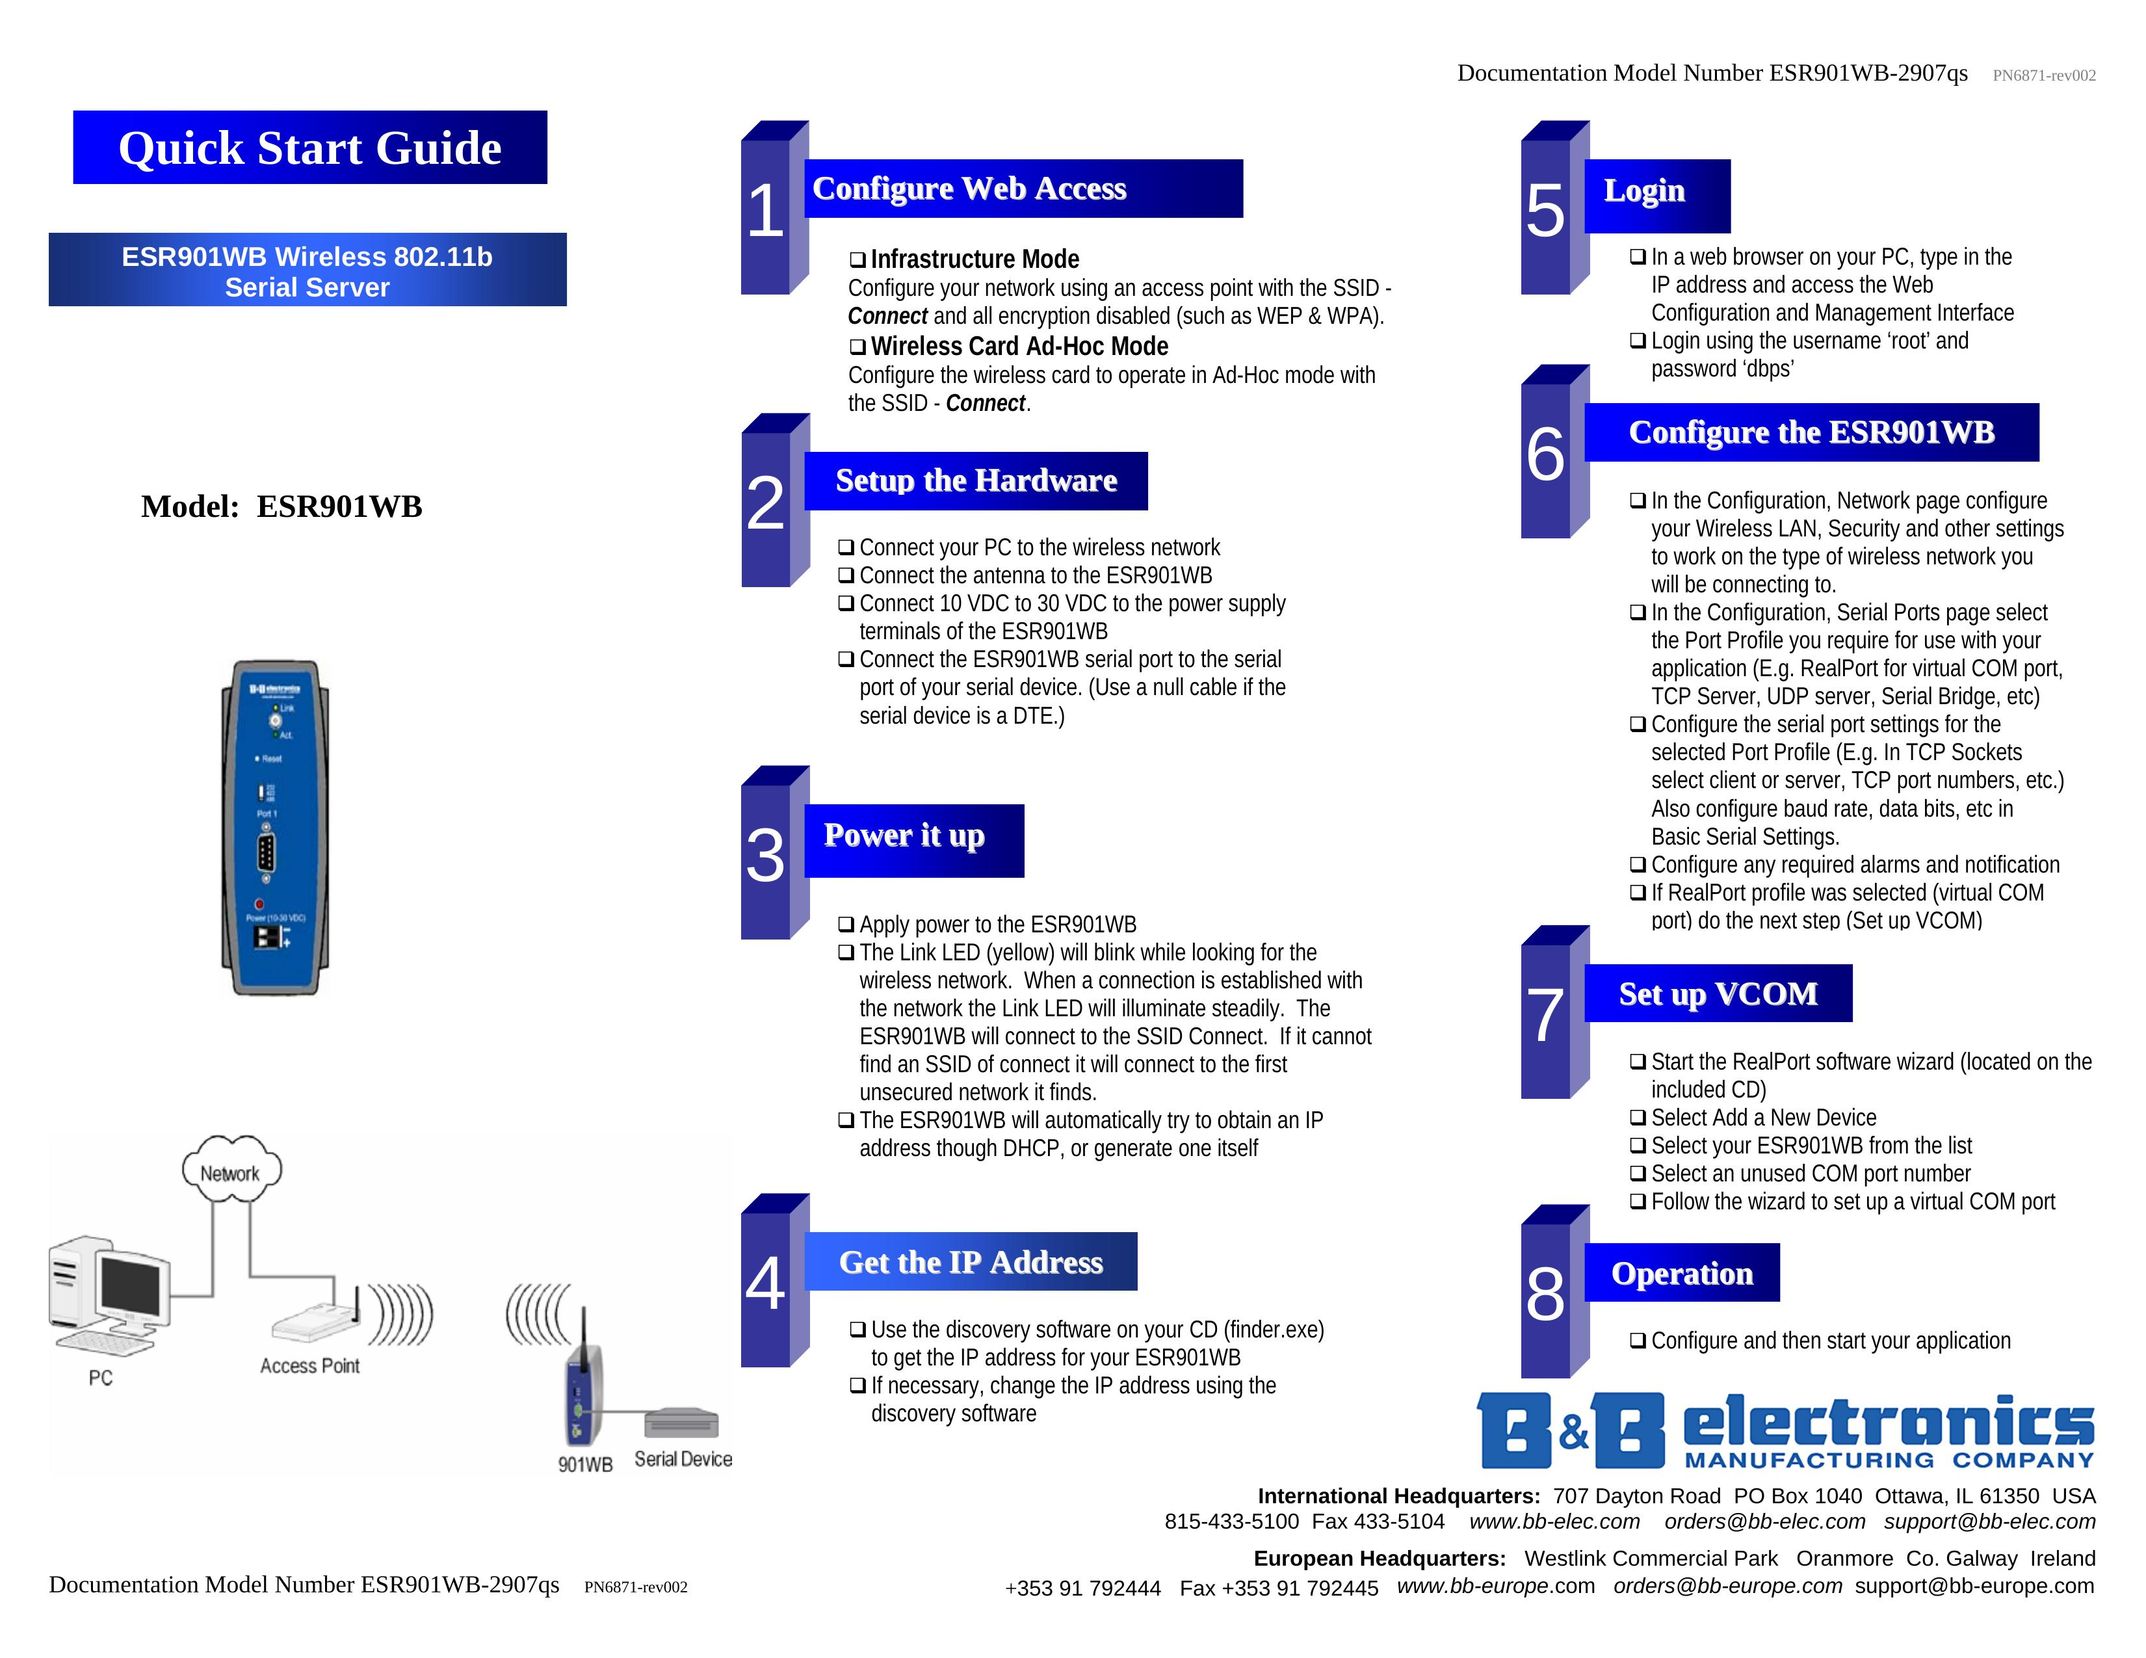 B&B Electronics ESR901WB Home Theater Server User Manual